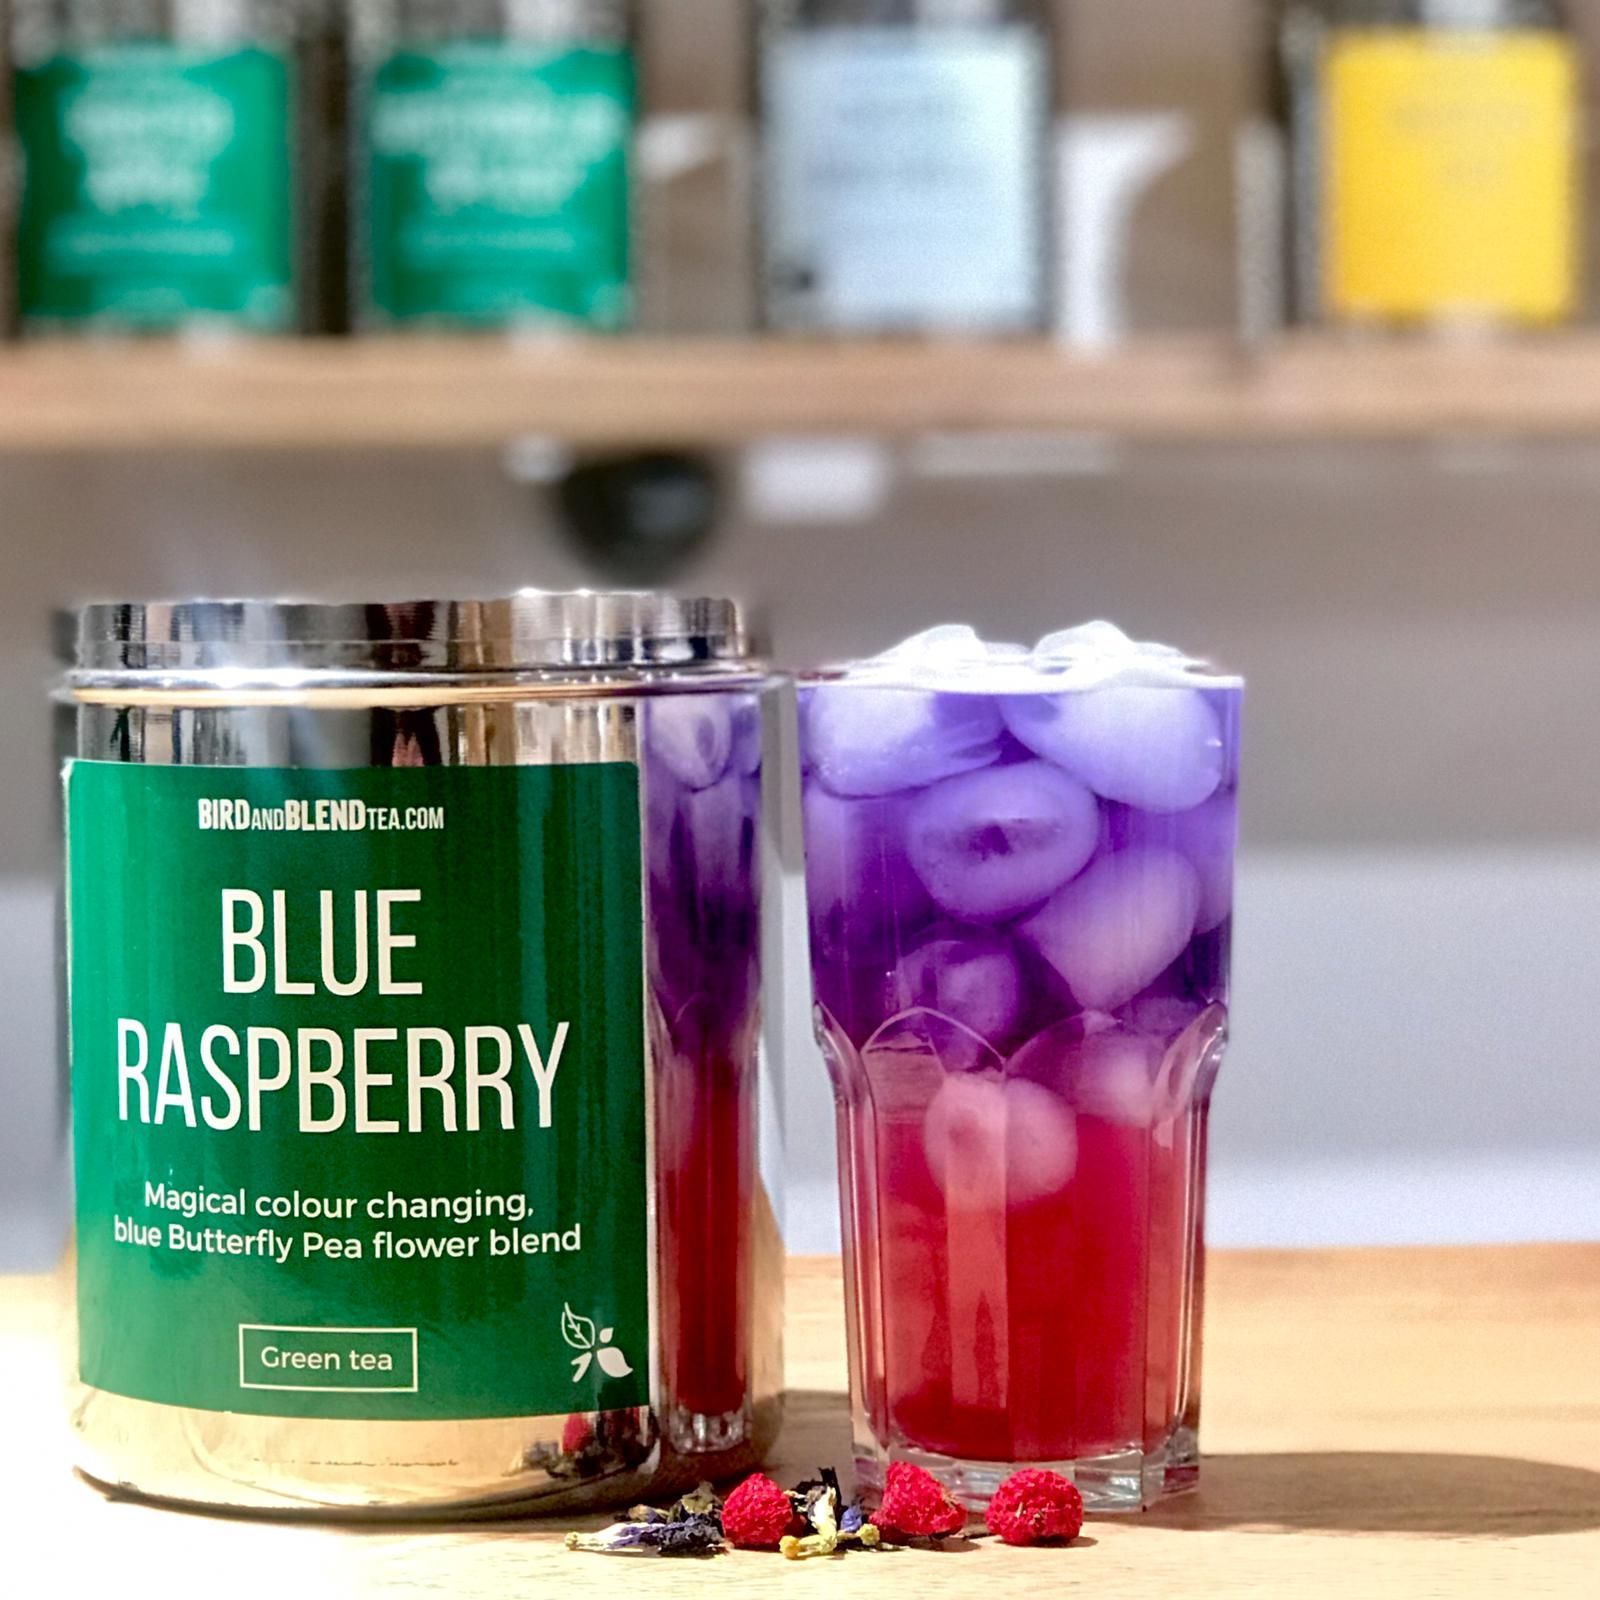 Sporvogn Ordinere Peck Bird & Blend Tea Co. on Twitter: "Blue Raspberry Magic! ✨ Happy FriYAY  Teabirds, we hope you have an amazing weekend! 💙 Get Blue Raspberry:  https://t.co/9nYAuyUx1X https://t.co/wFwUxat5nZ" / Twitter